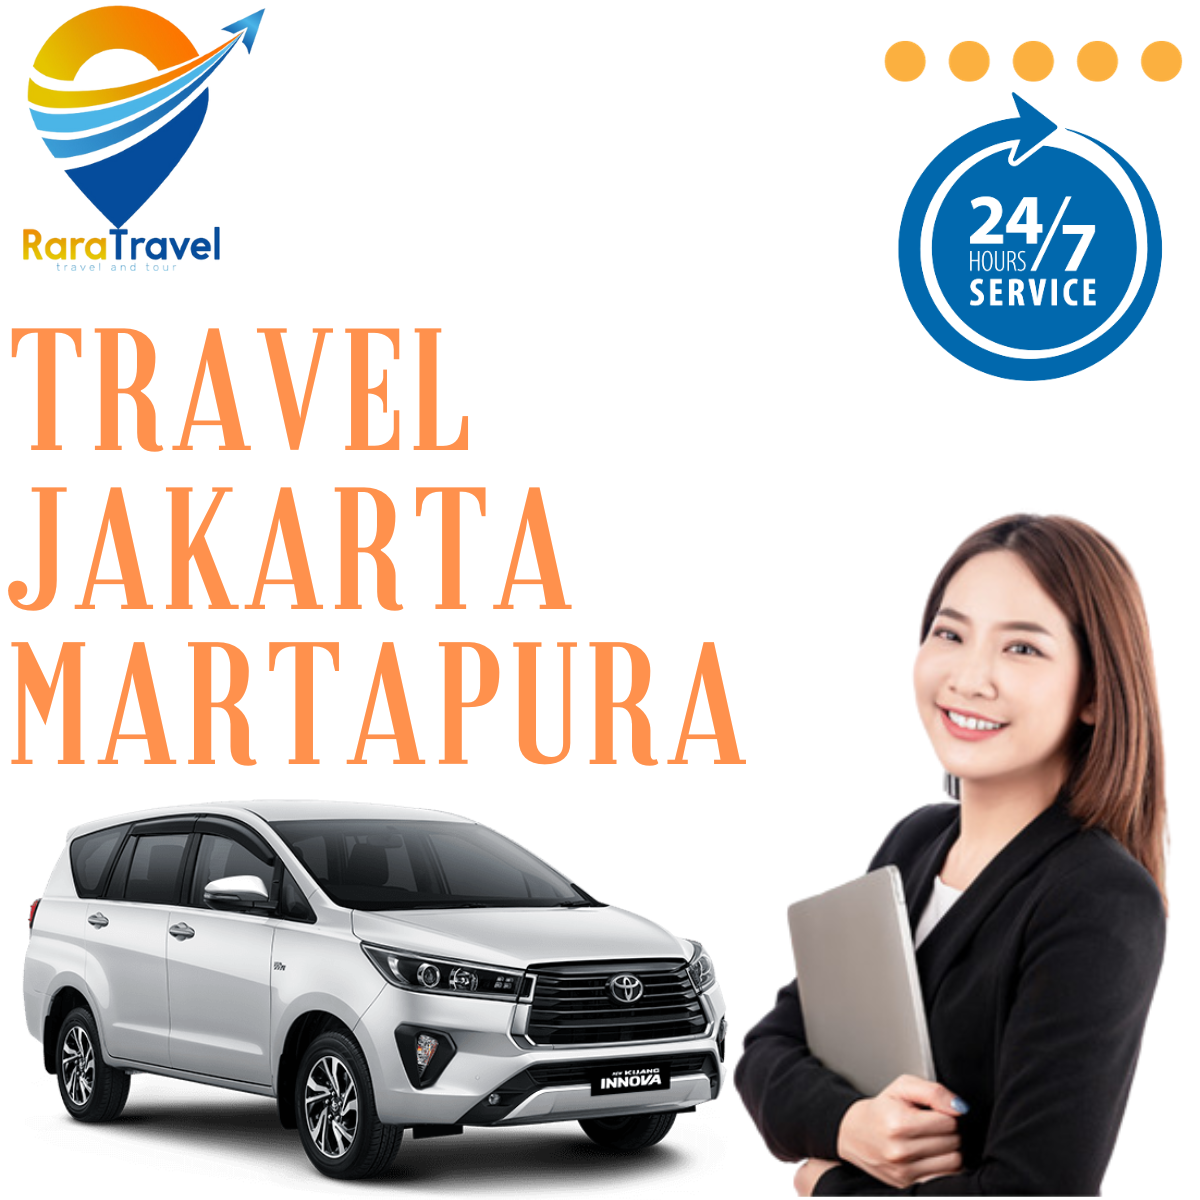 Travel Jakarta Martapura PP Harga Tiket Murah